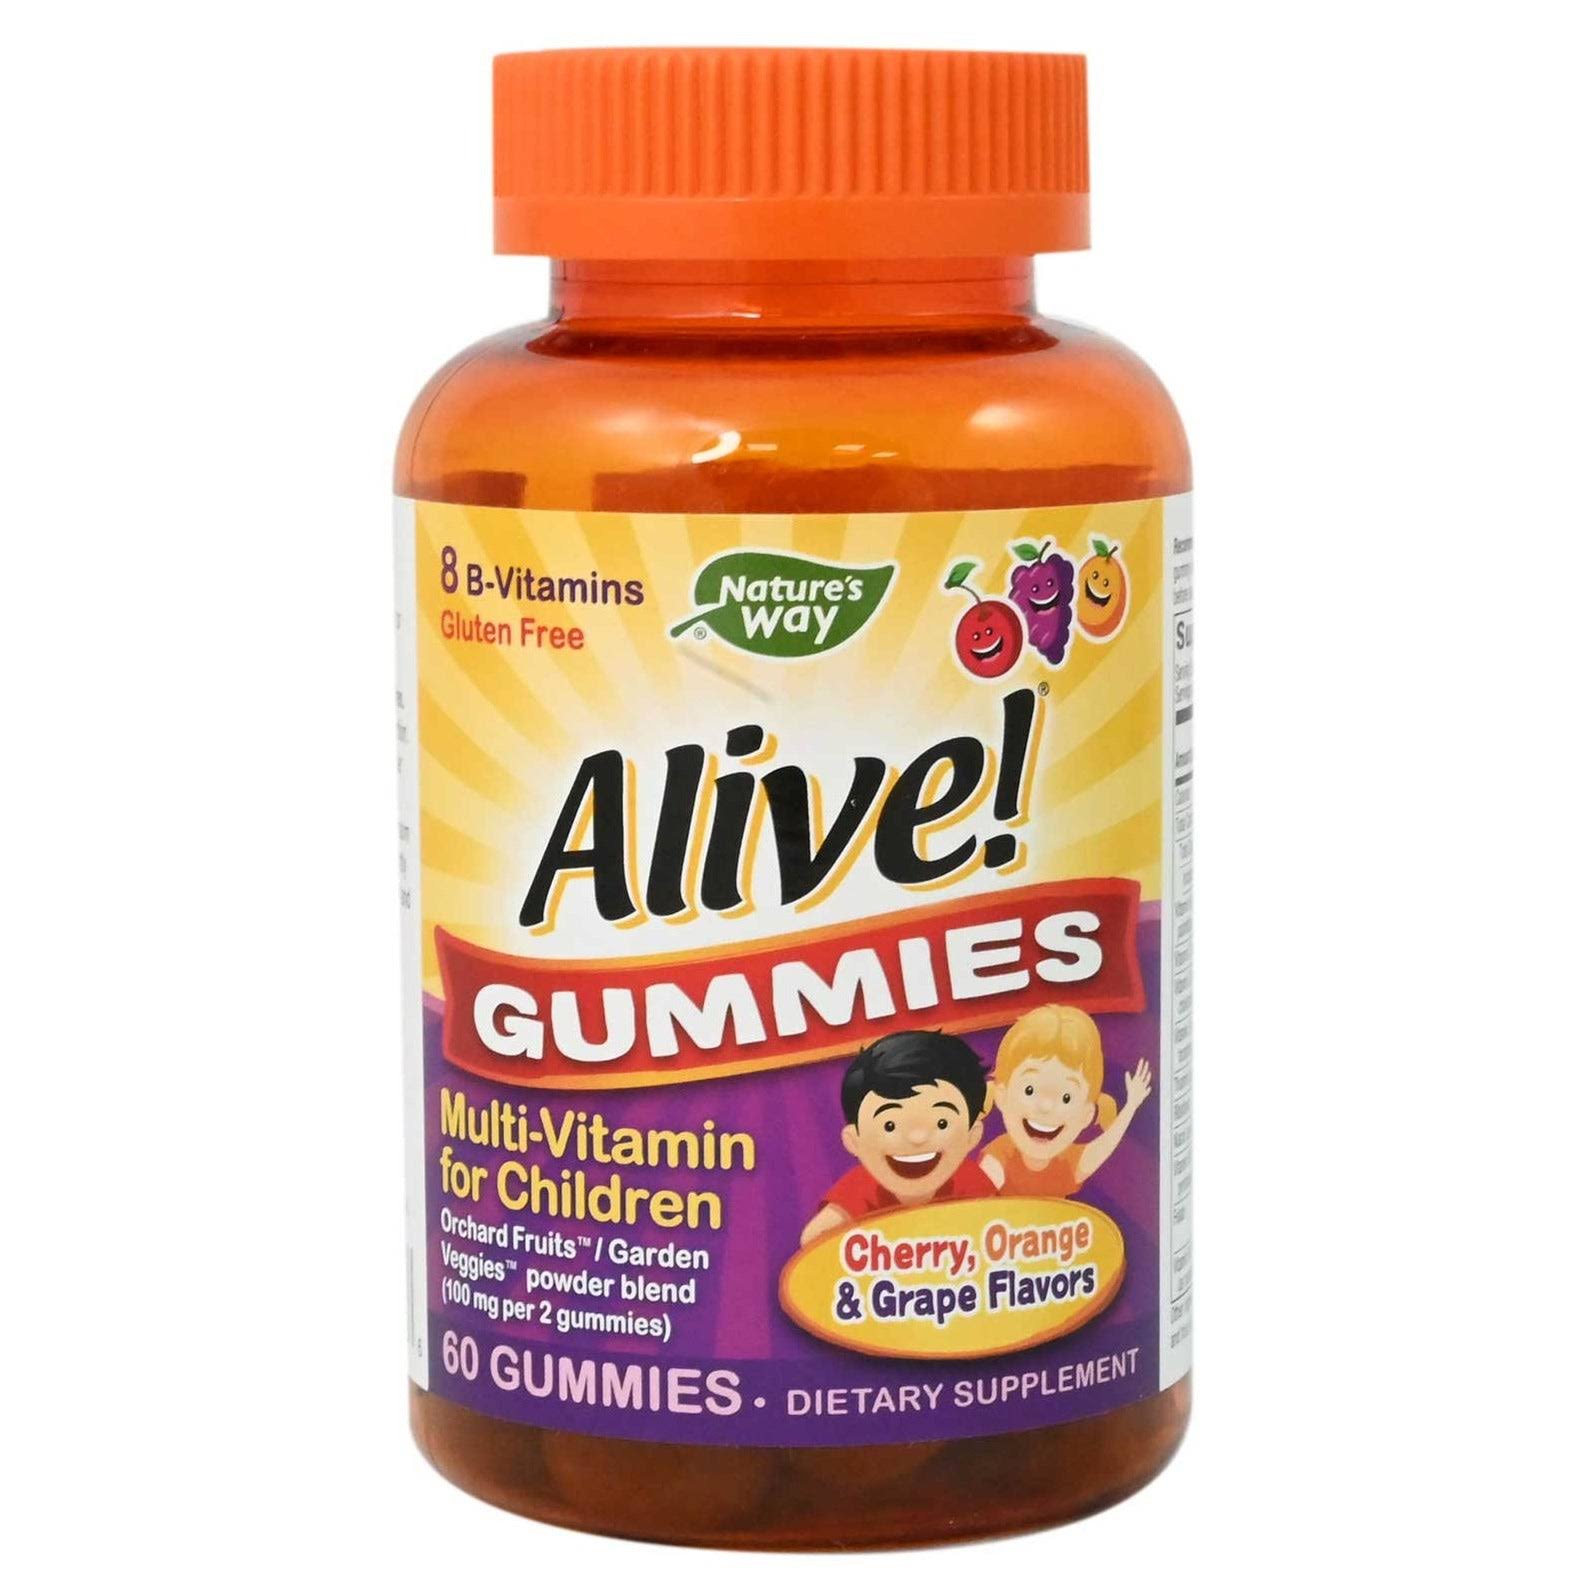 Alive! Gummies Multi-Vitamin for Children - Cherry, Orange & Grape, x60